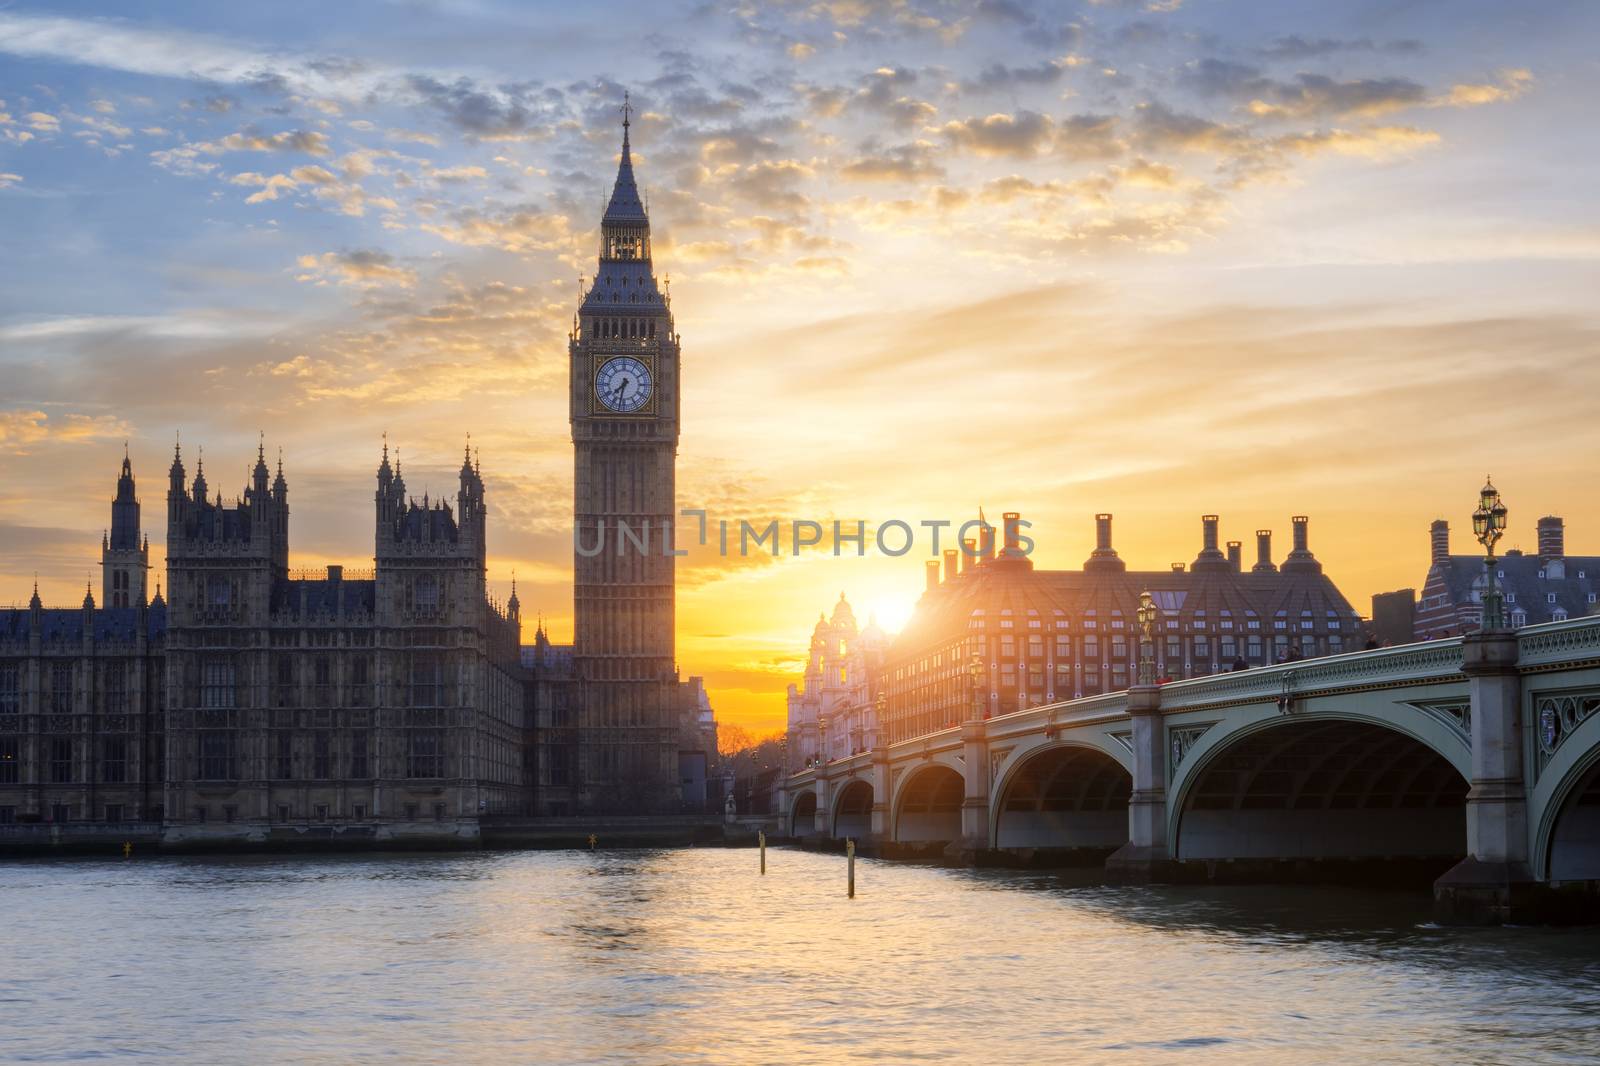 Famous Big Ben clock tower in London at sunset, UK.